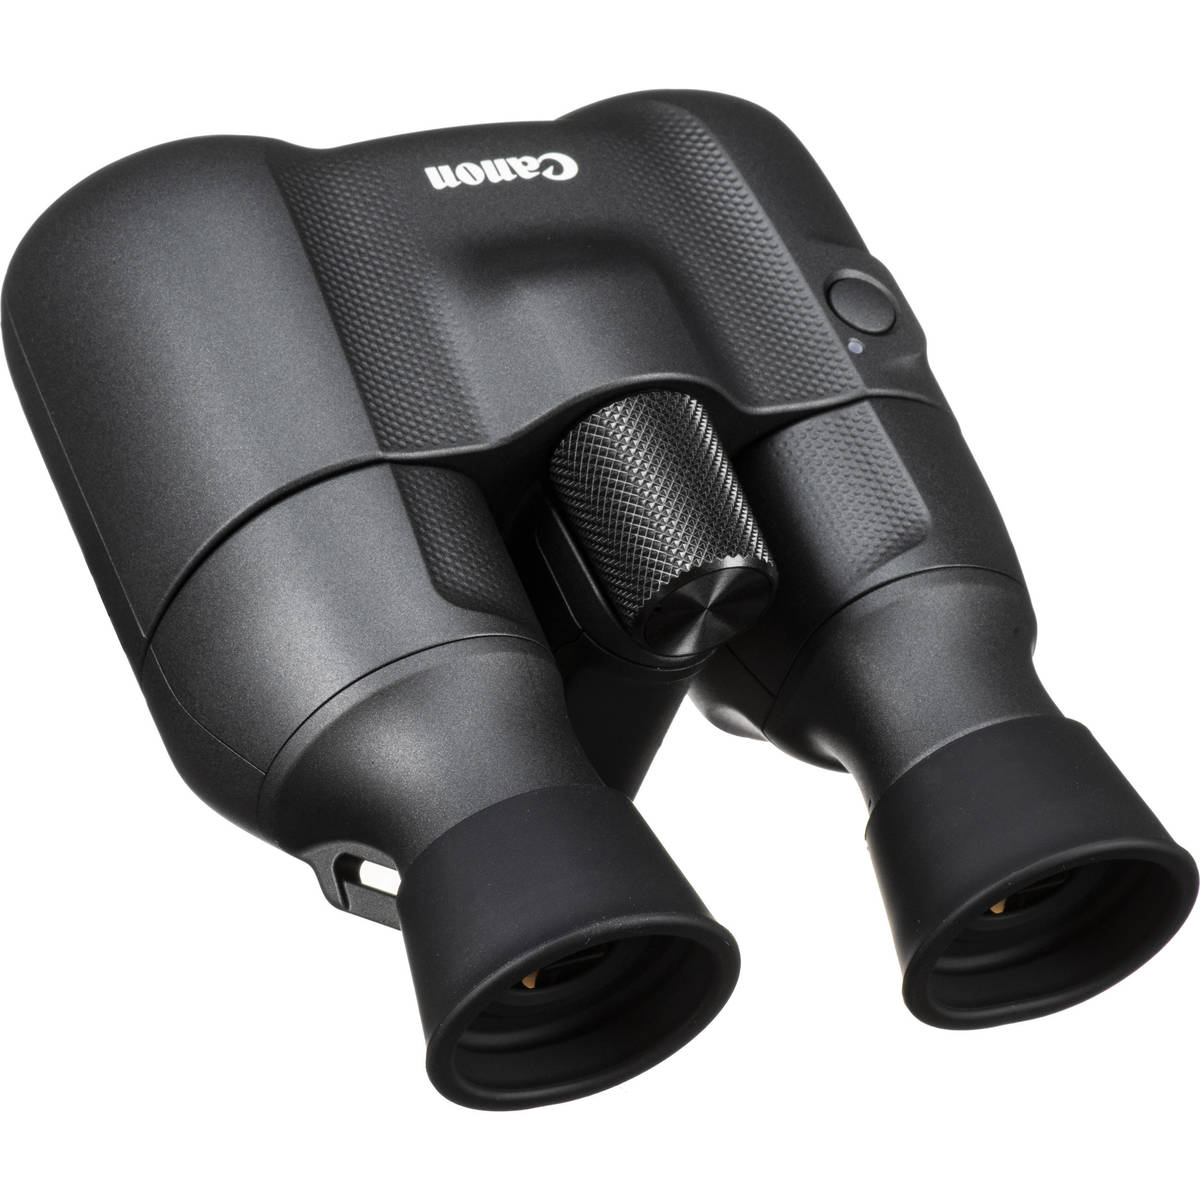 1. Canon 8x20 IS Binoculars